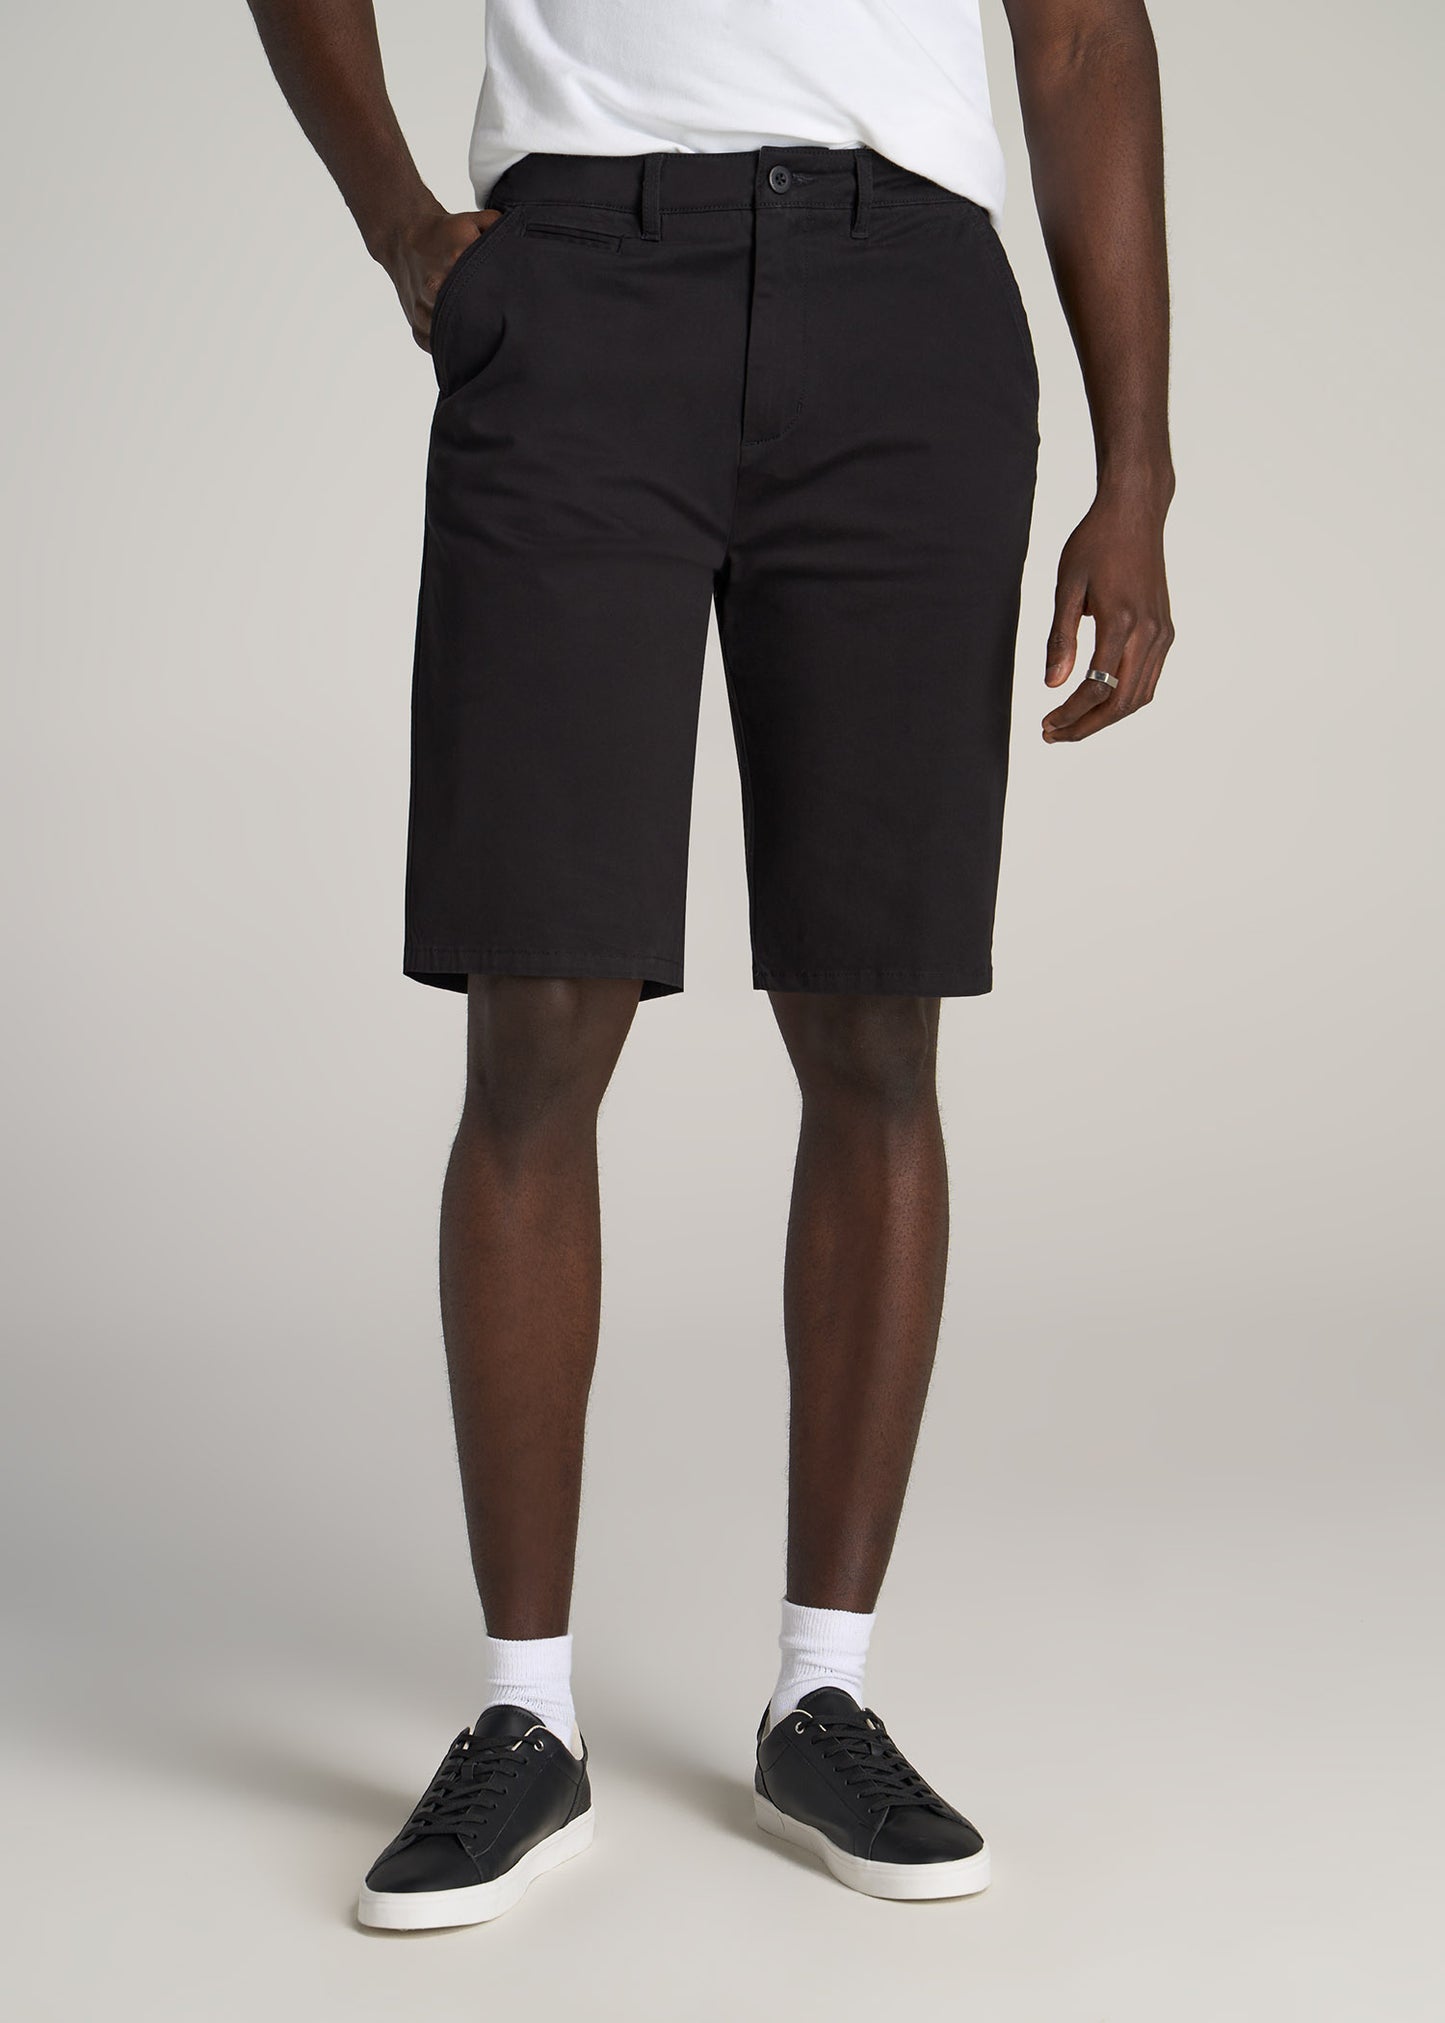       American-Tall-Men-Chino-Shorts-Black-front